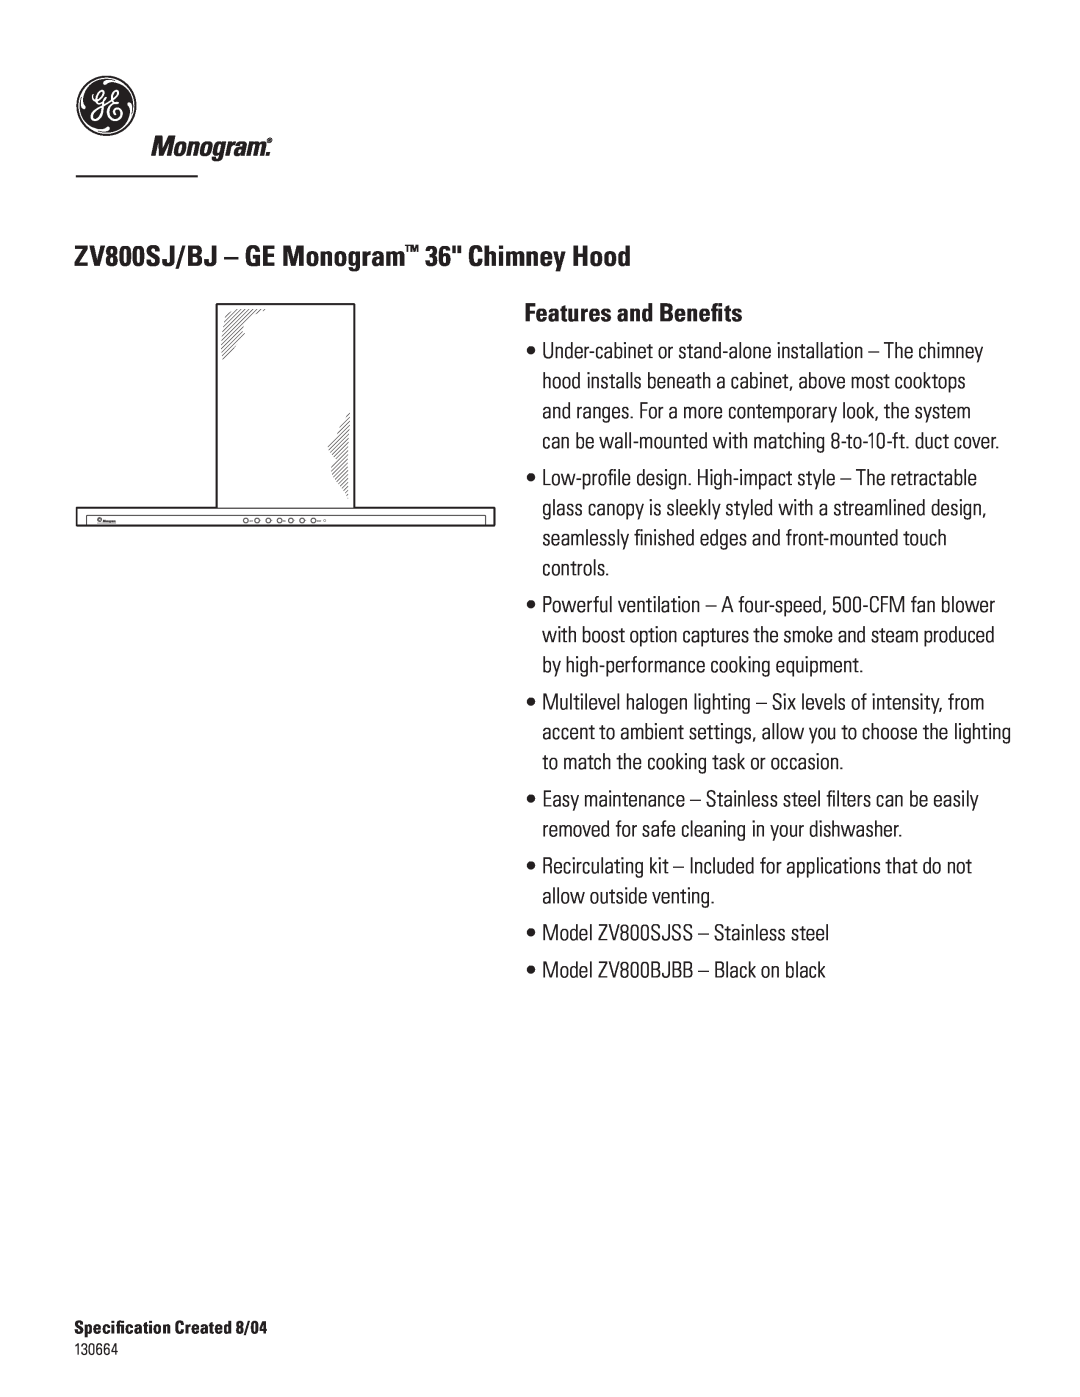 GE Monogram dimensions ZV800SJ/BJ - GE Monogram 36 Chimney Hood, Features and Beneﬁ ts 